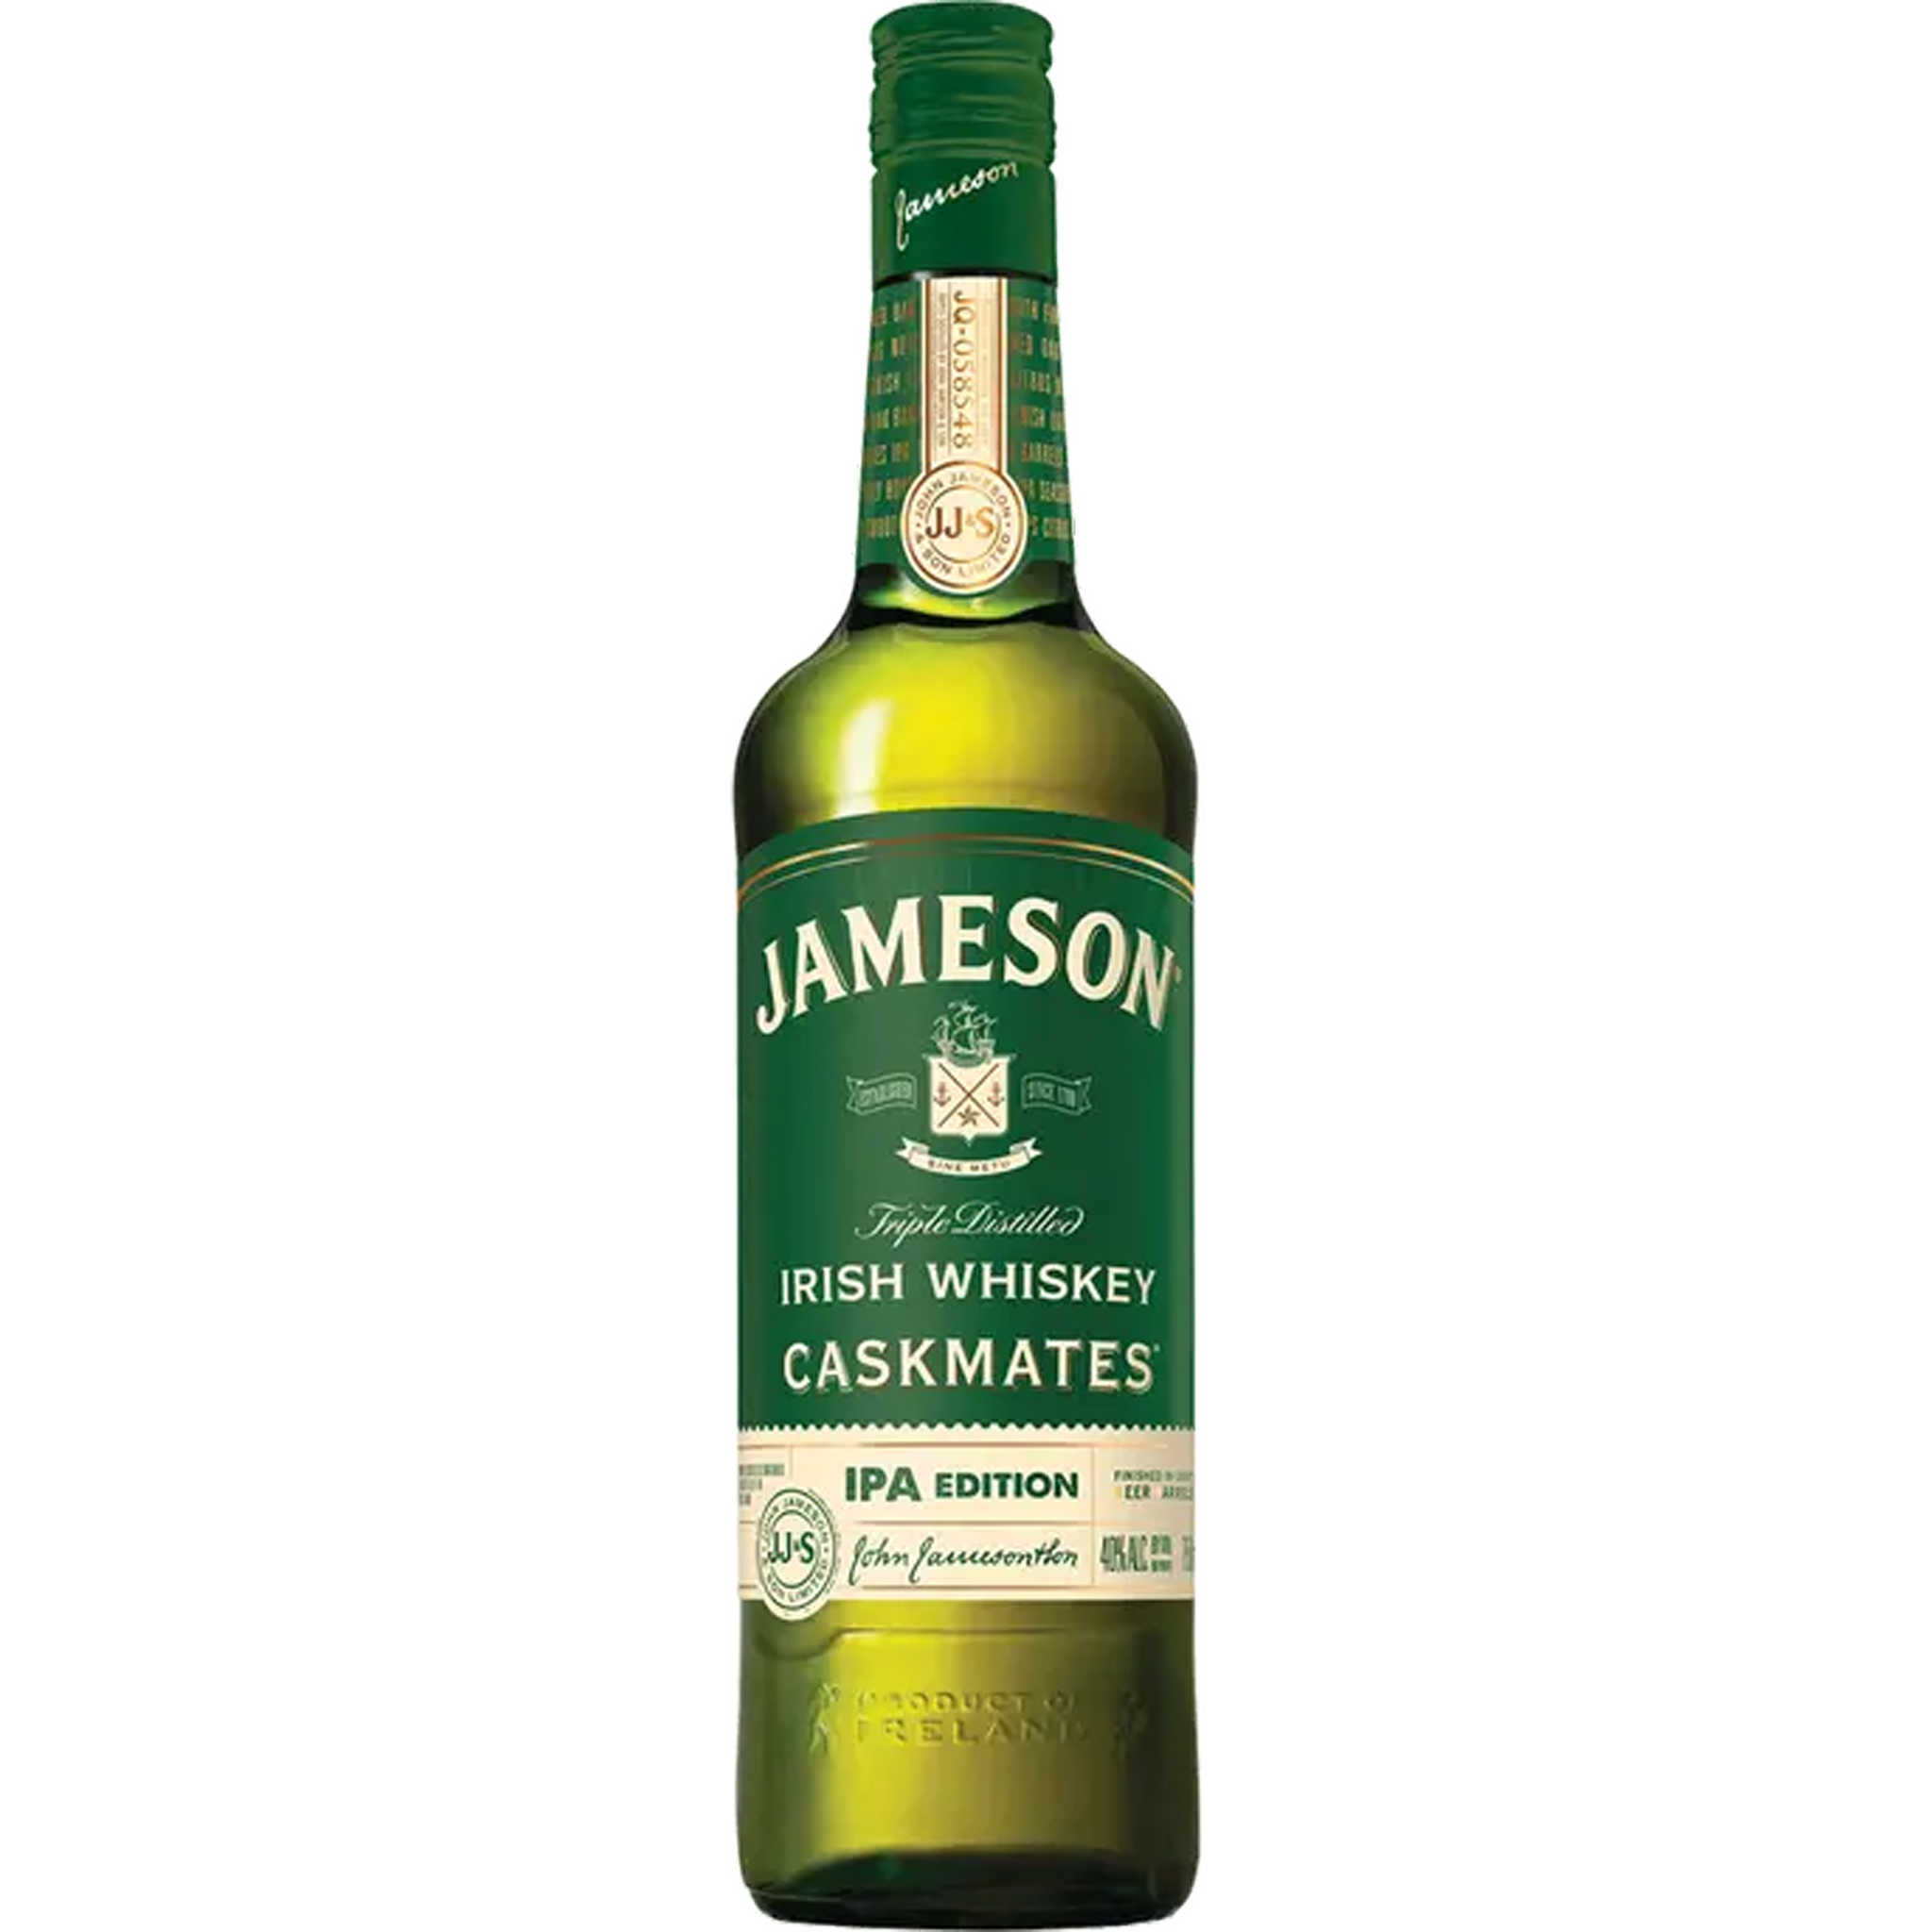 Jameson IPA Edition Irish Whiskey Caskmates | LiquorOnBroadway